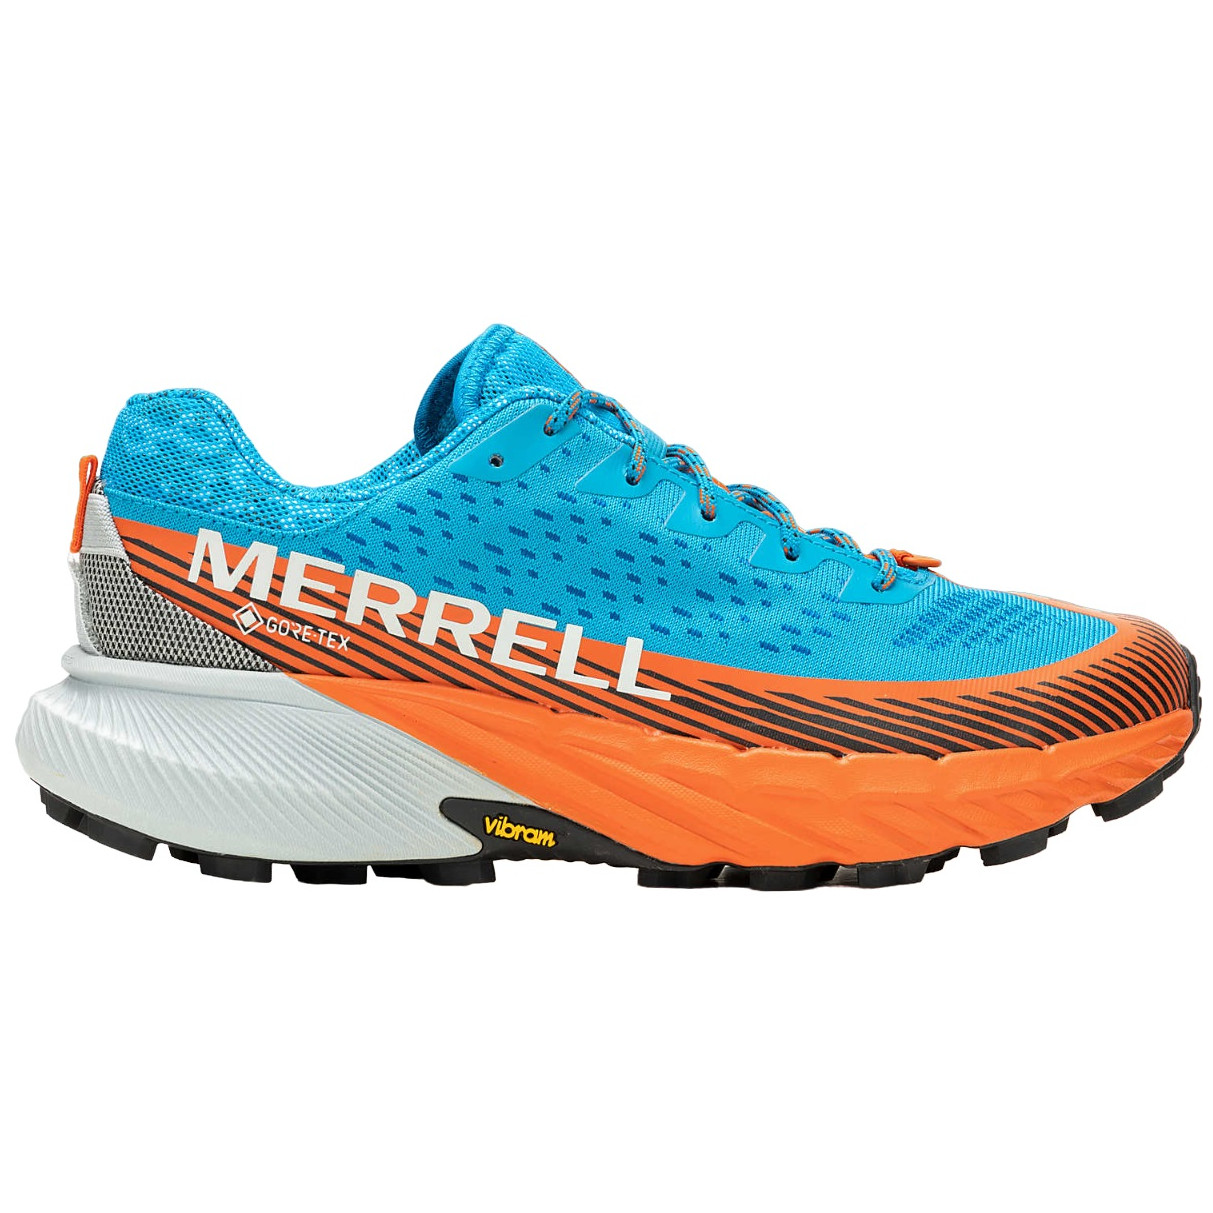 Pánské běžecké boty Merrell Agility Peak 5 Gtx Velikost bot (EU): 42 / Barva: modrá/oranžová